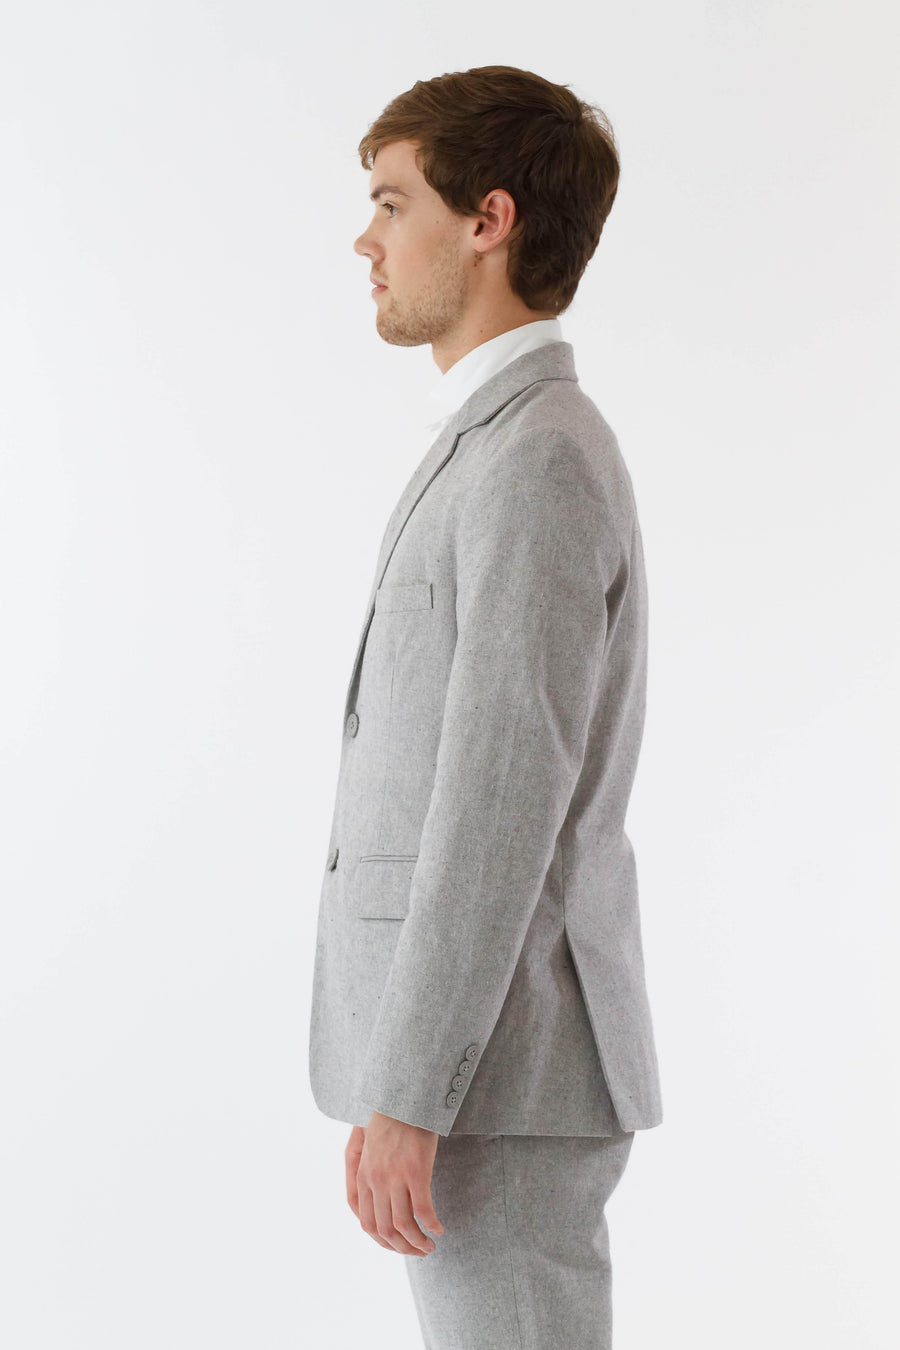 Mens Grey Suit Jacket front view